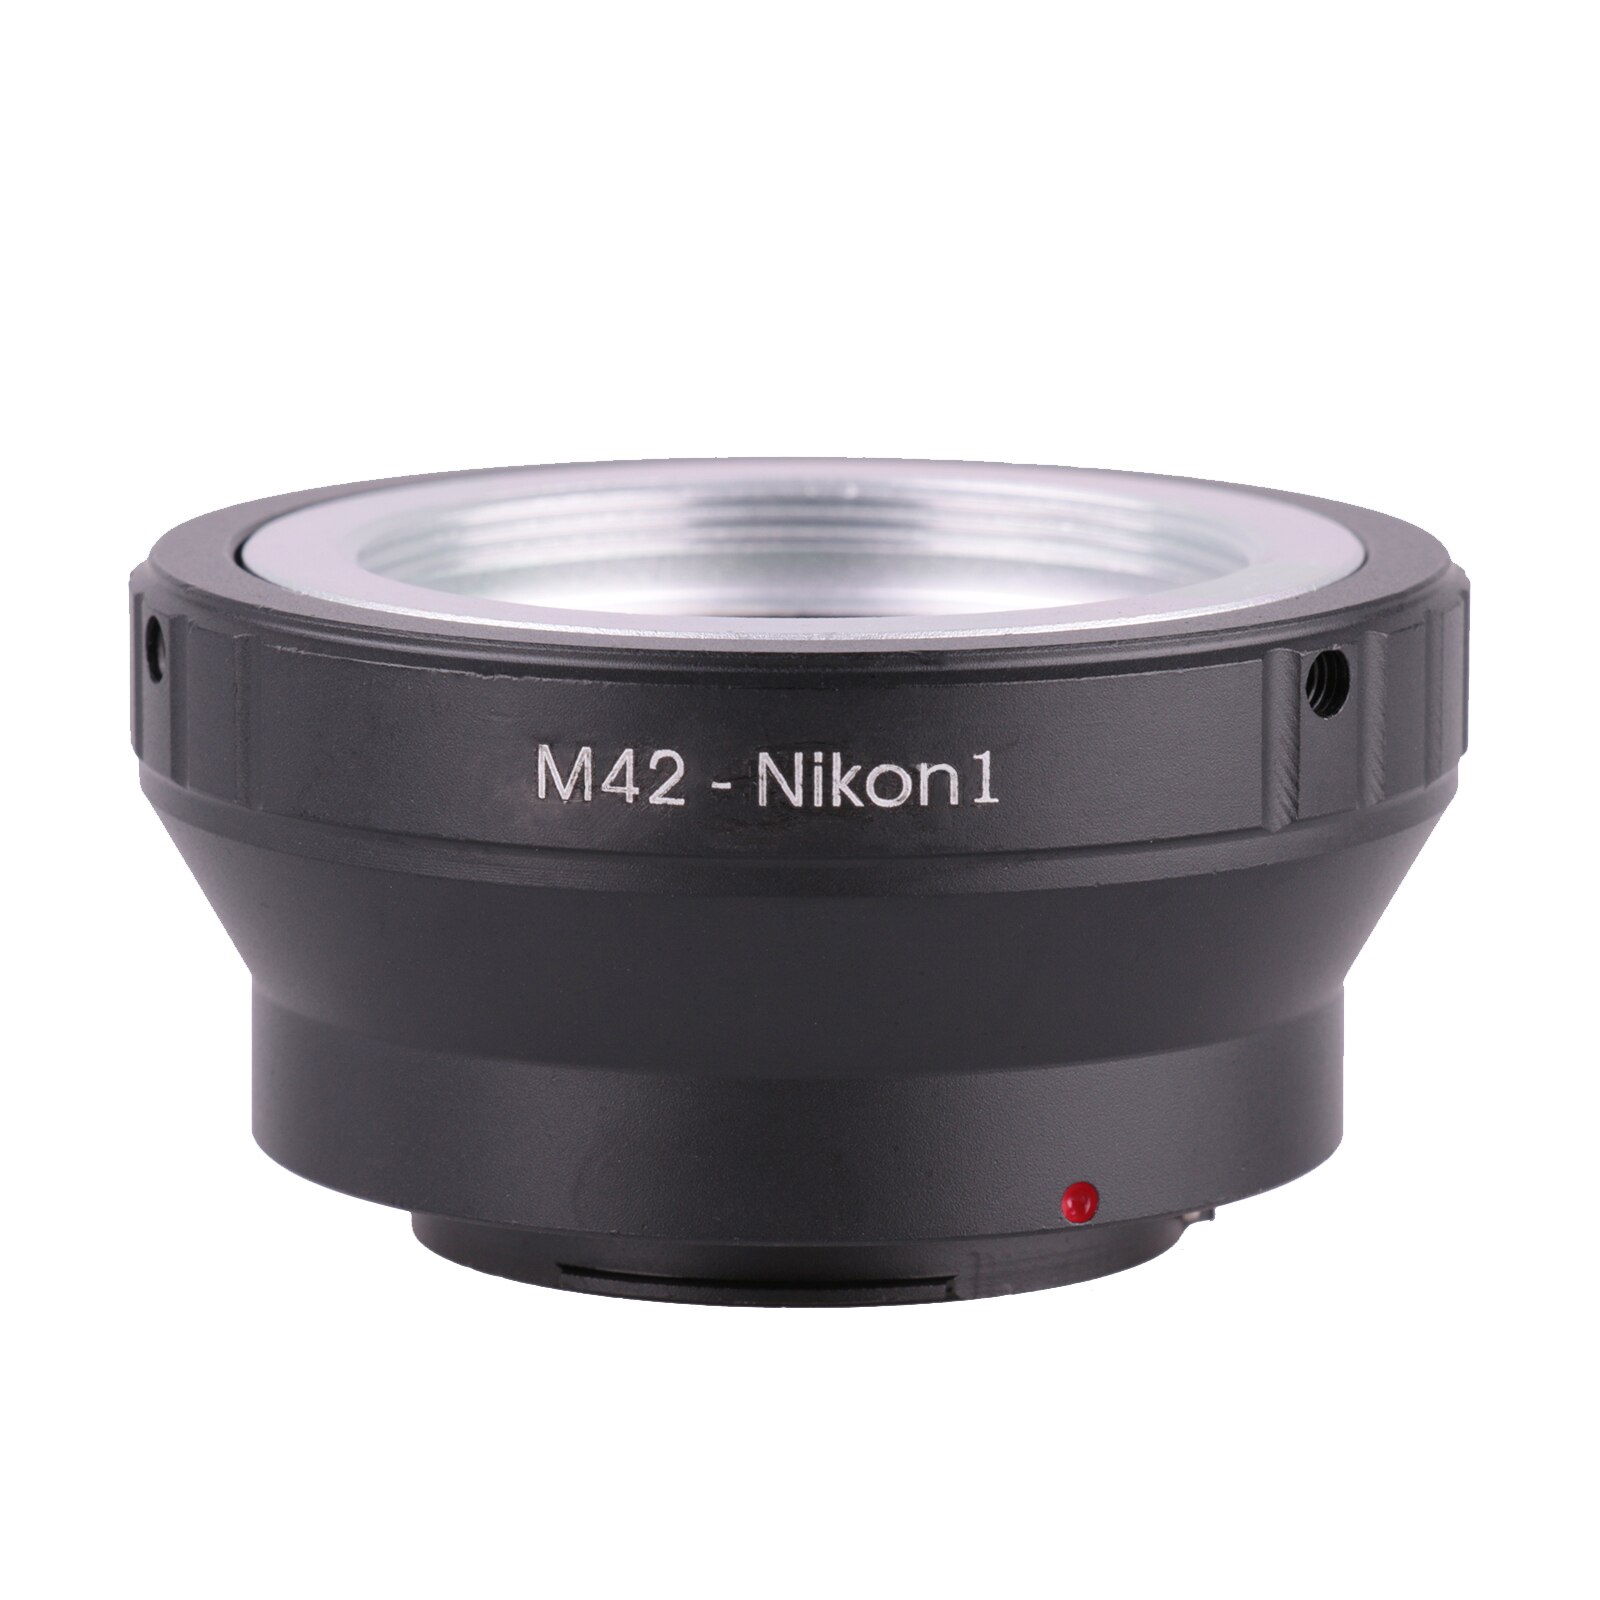 M42-N1 Adapter Mount Voor M42 Lens Voor Nik 1 N1 J1 J2 J3 J4 J5 S1 V1 V2 V3 AW1 camera